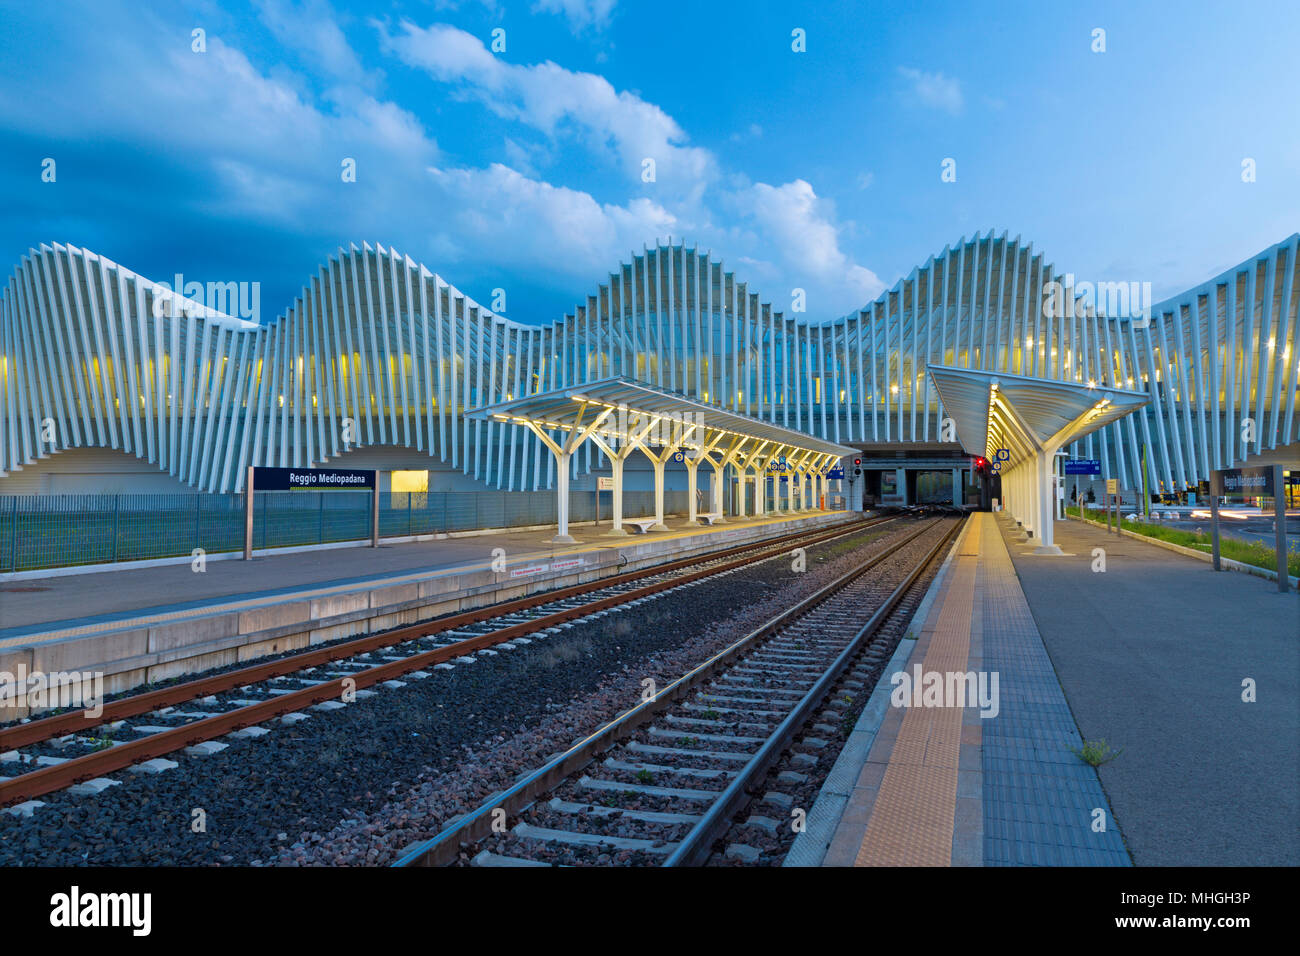 Reggio Emilia - The Reggio Emilia AV Mediopadana railway station at dusk by architect Santiago Calatrava. Stock Photo